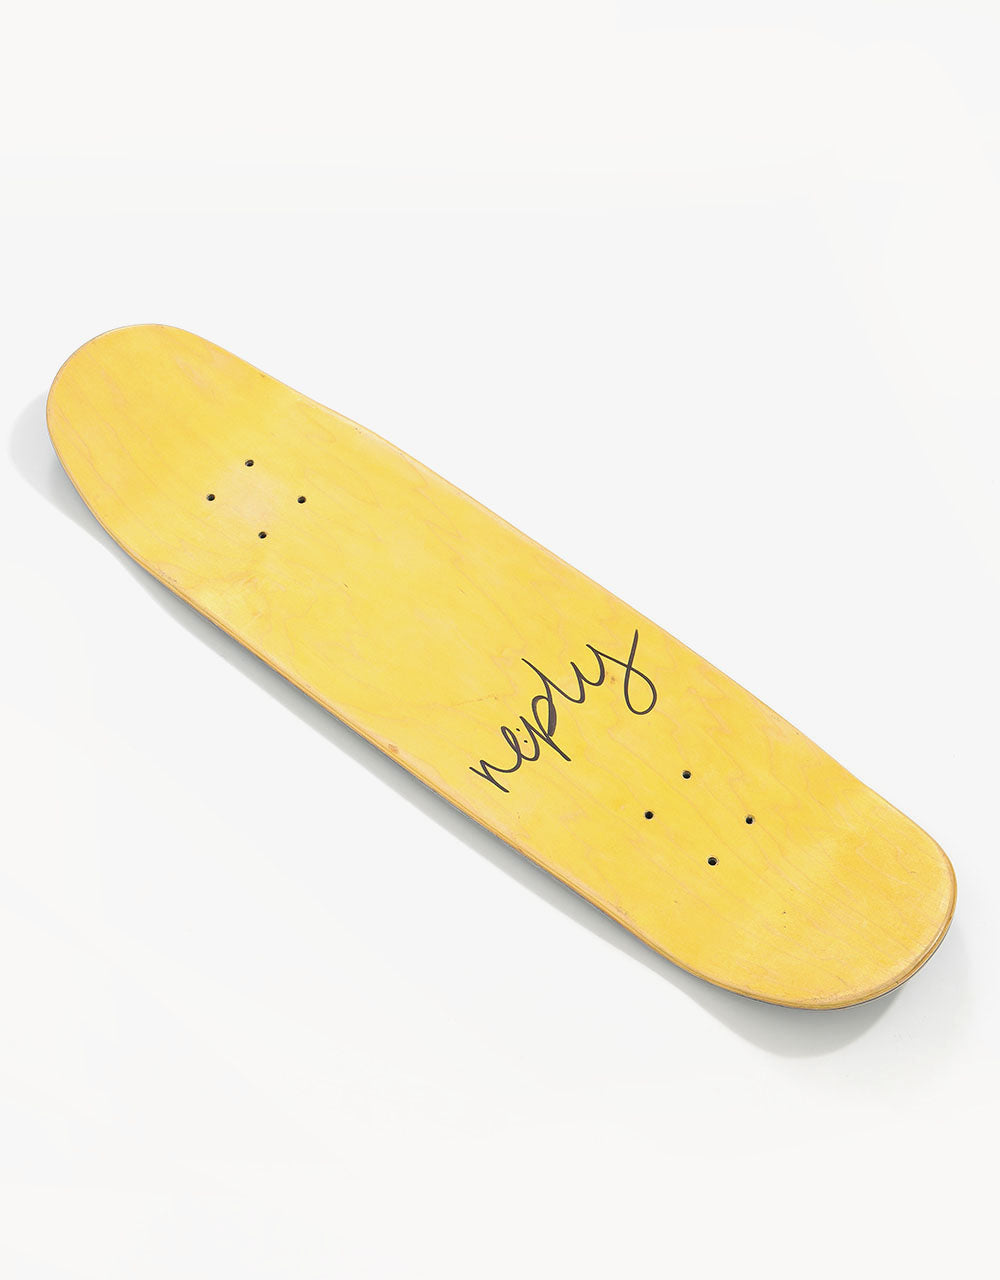 re:ply Tan Oak Skateboard Deck - 8" x 30.5"